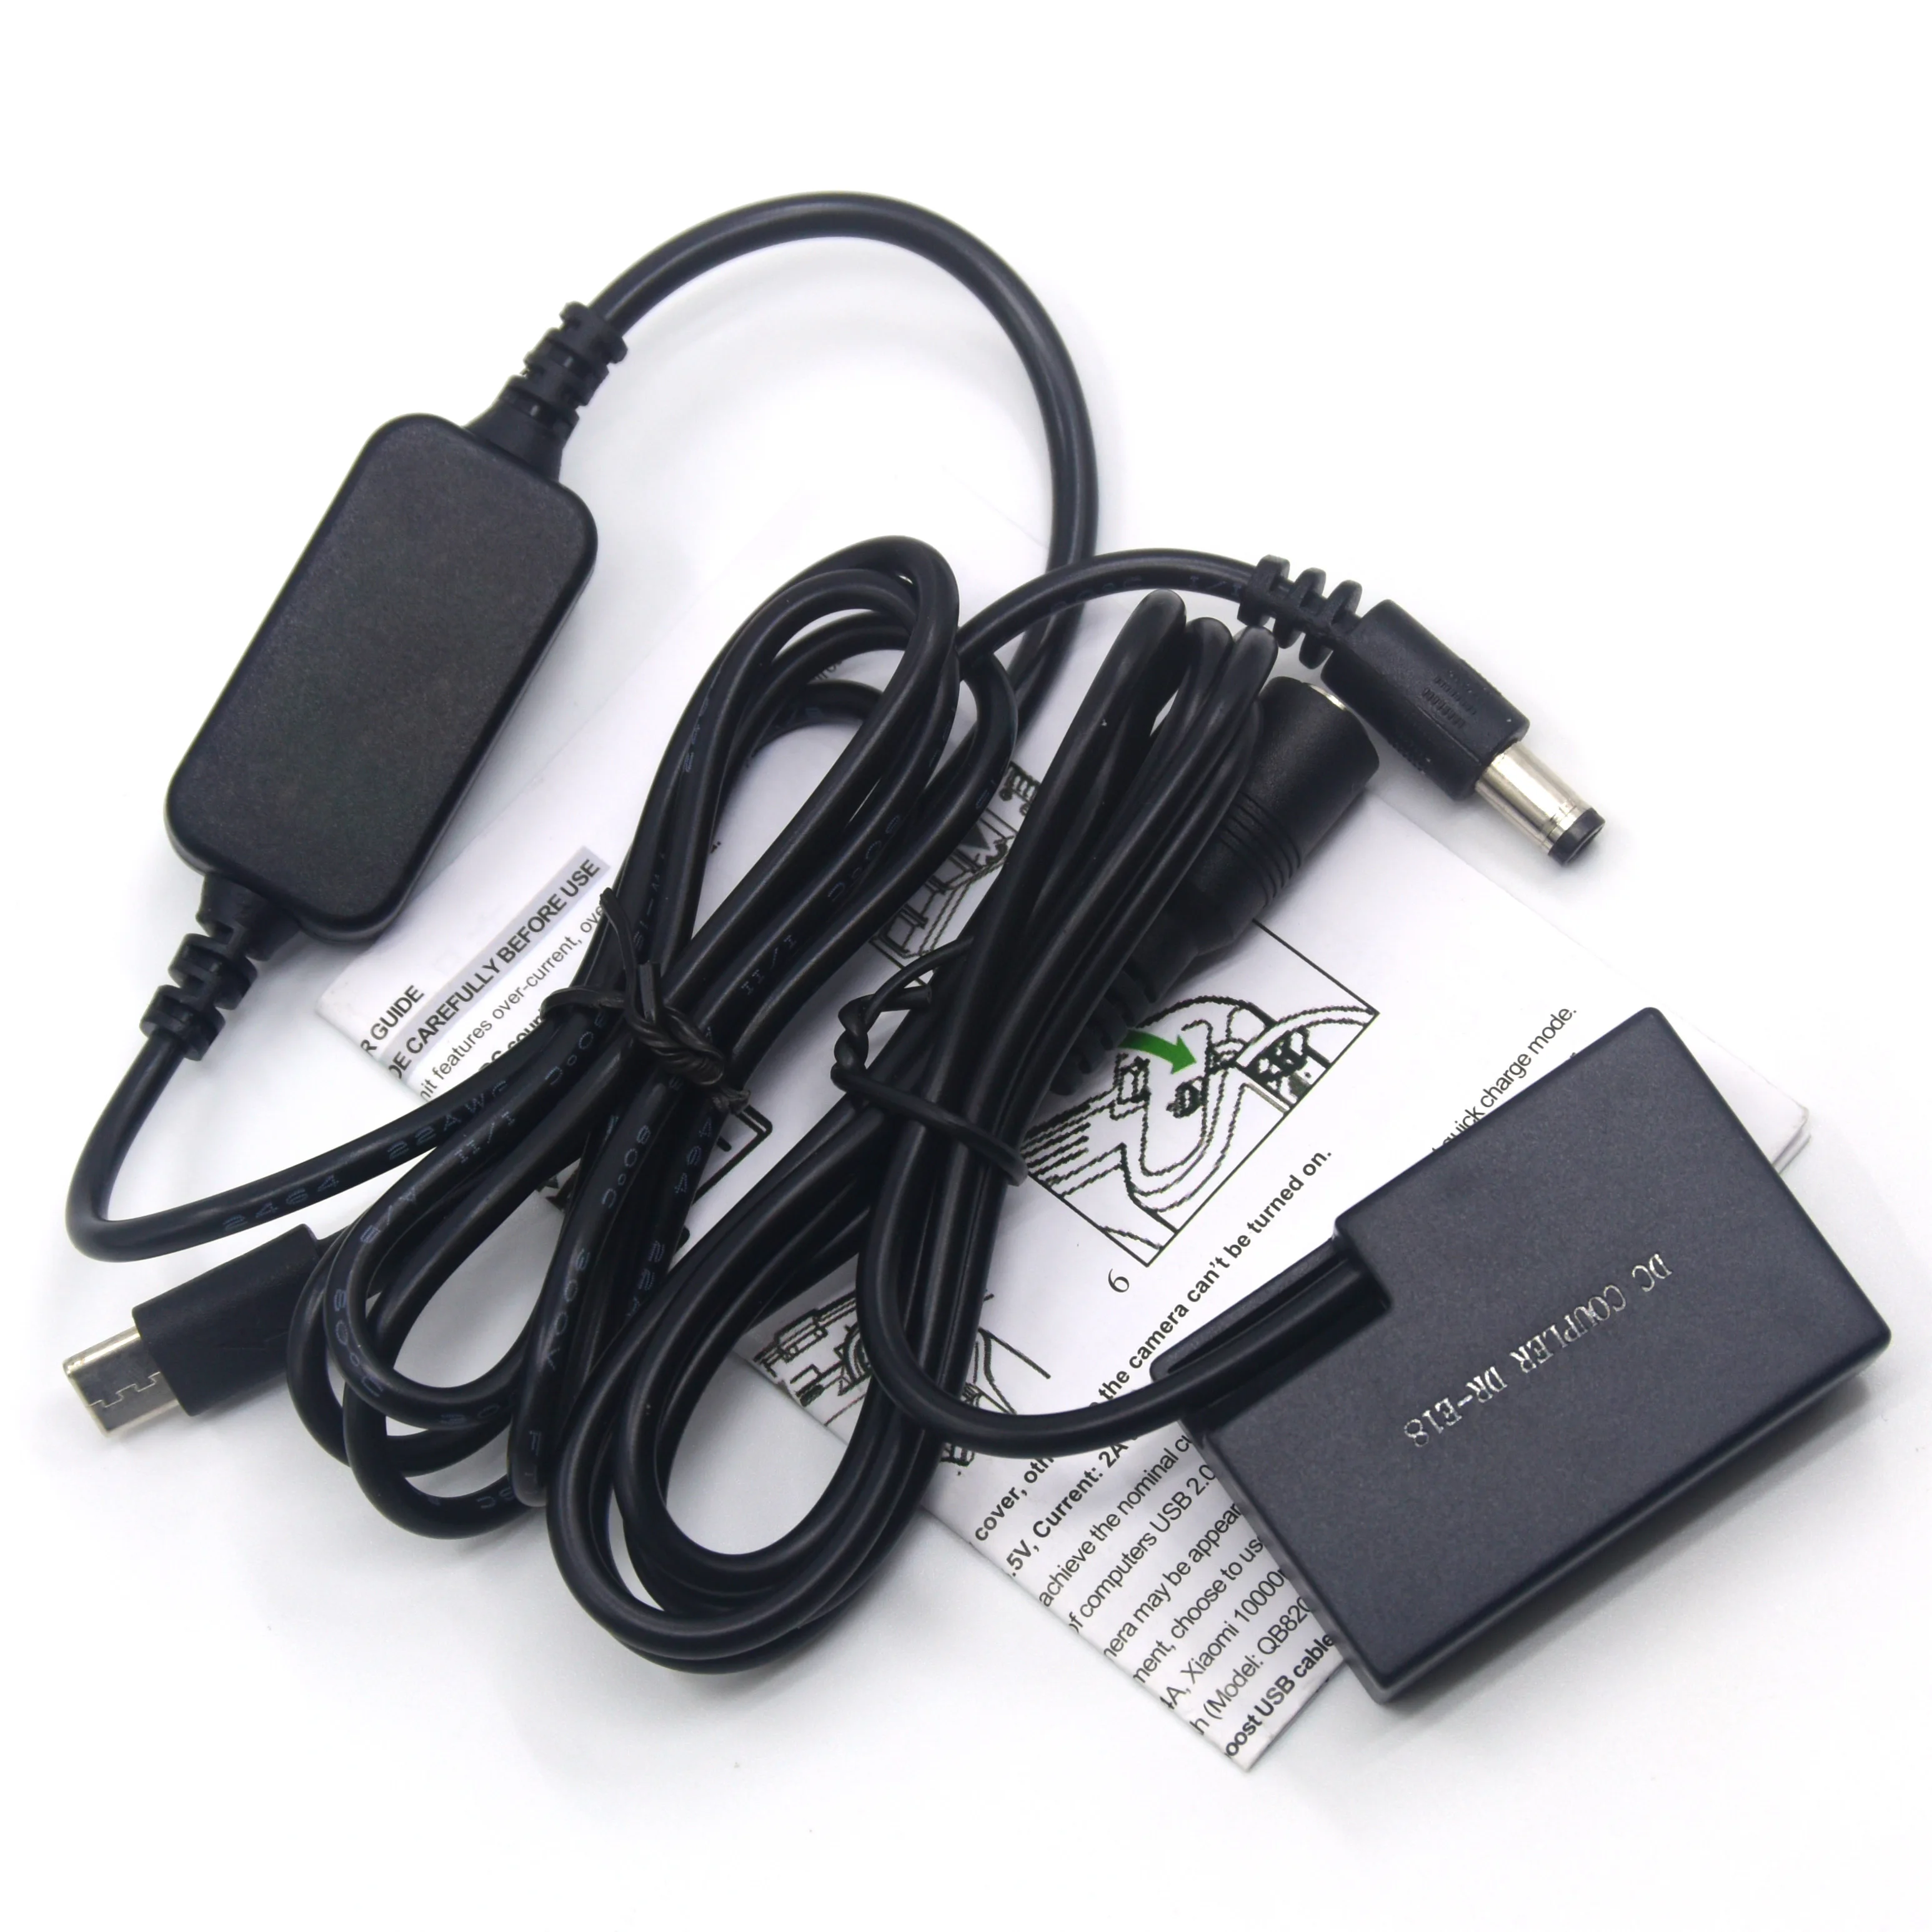 

USB Type-C Power Adapter Cable + LP-E17 Dummy Battery DR-E18 for Canon EOS 750D Kiss X8i T7i T6i 760D T6S 77D 800D 200D Rebel